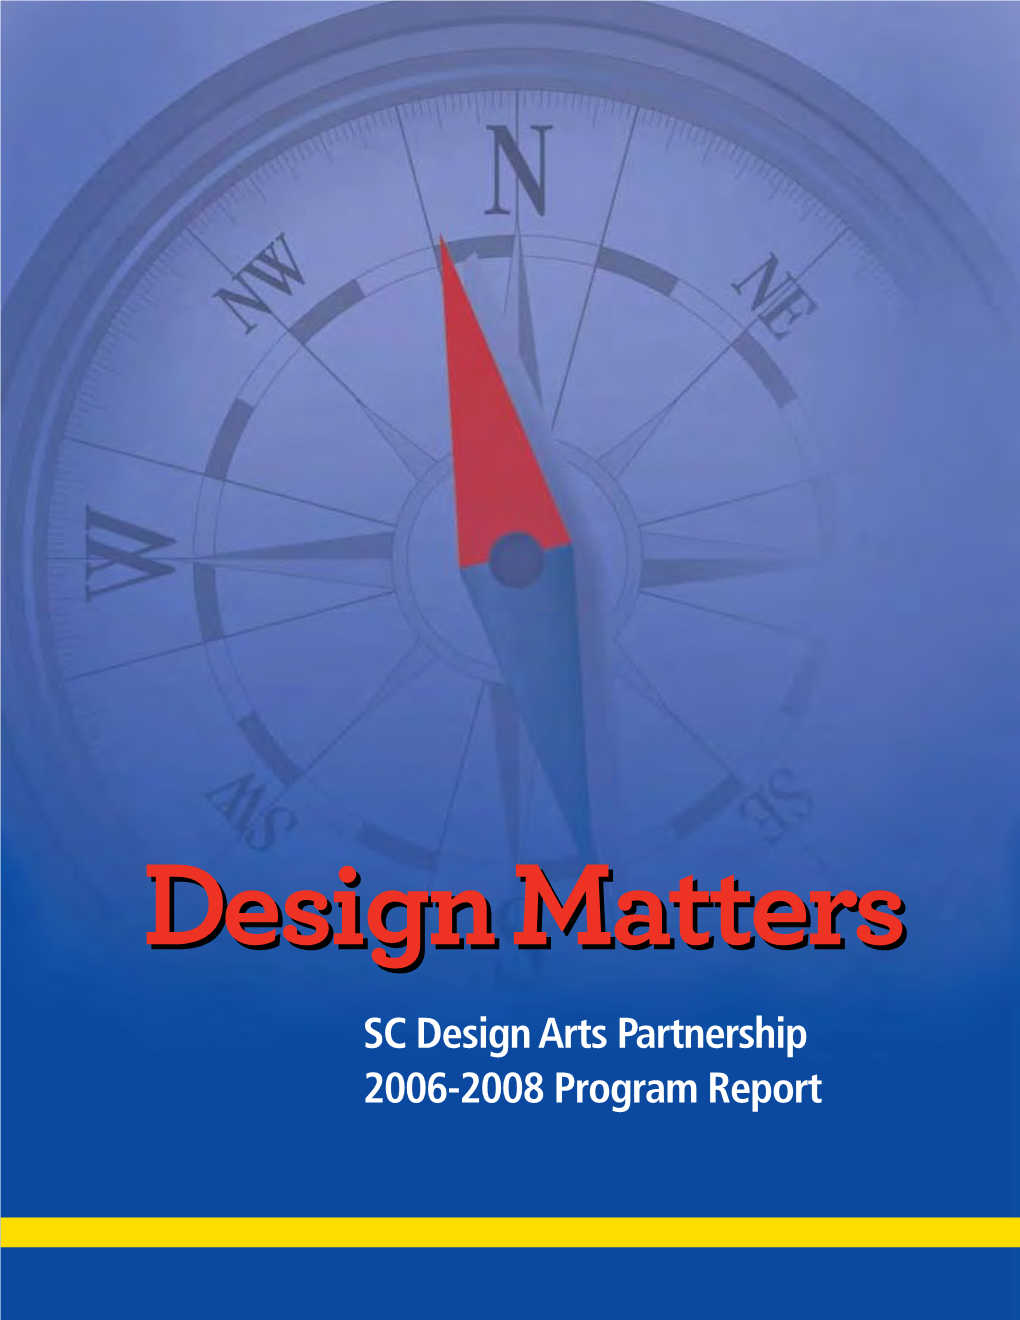 SC Design Arts Partnership 2006-2008 Program Report Contents the South Carolina Design Arts I